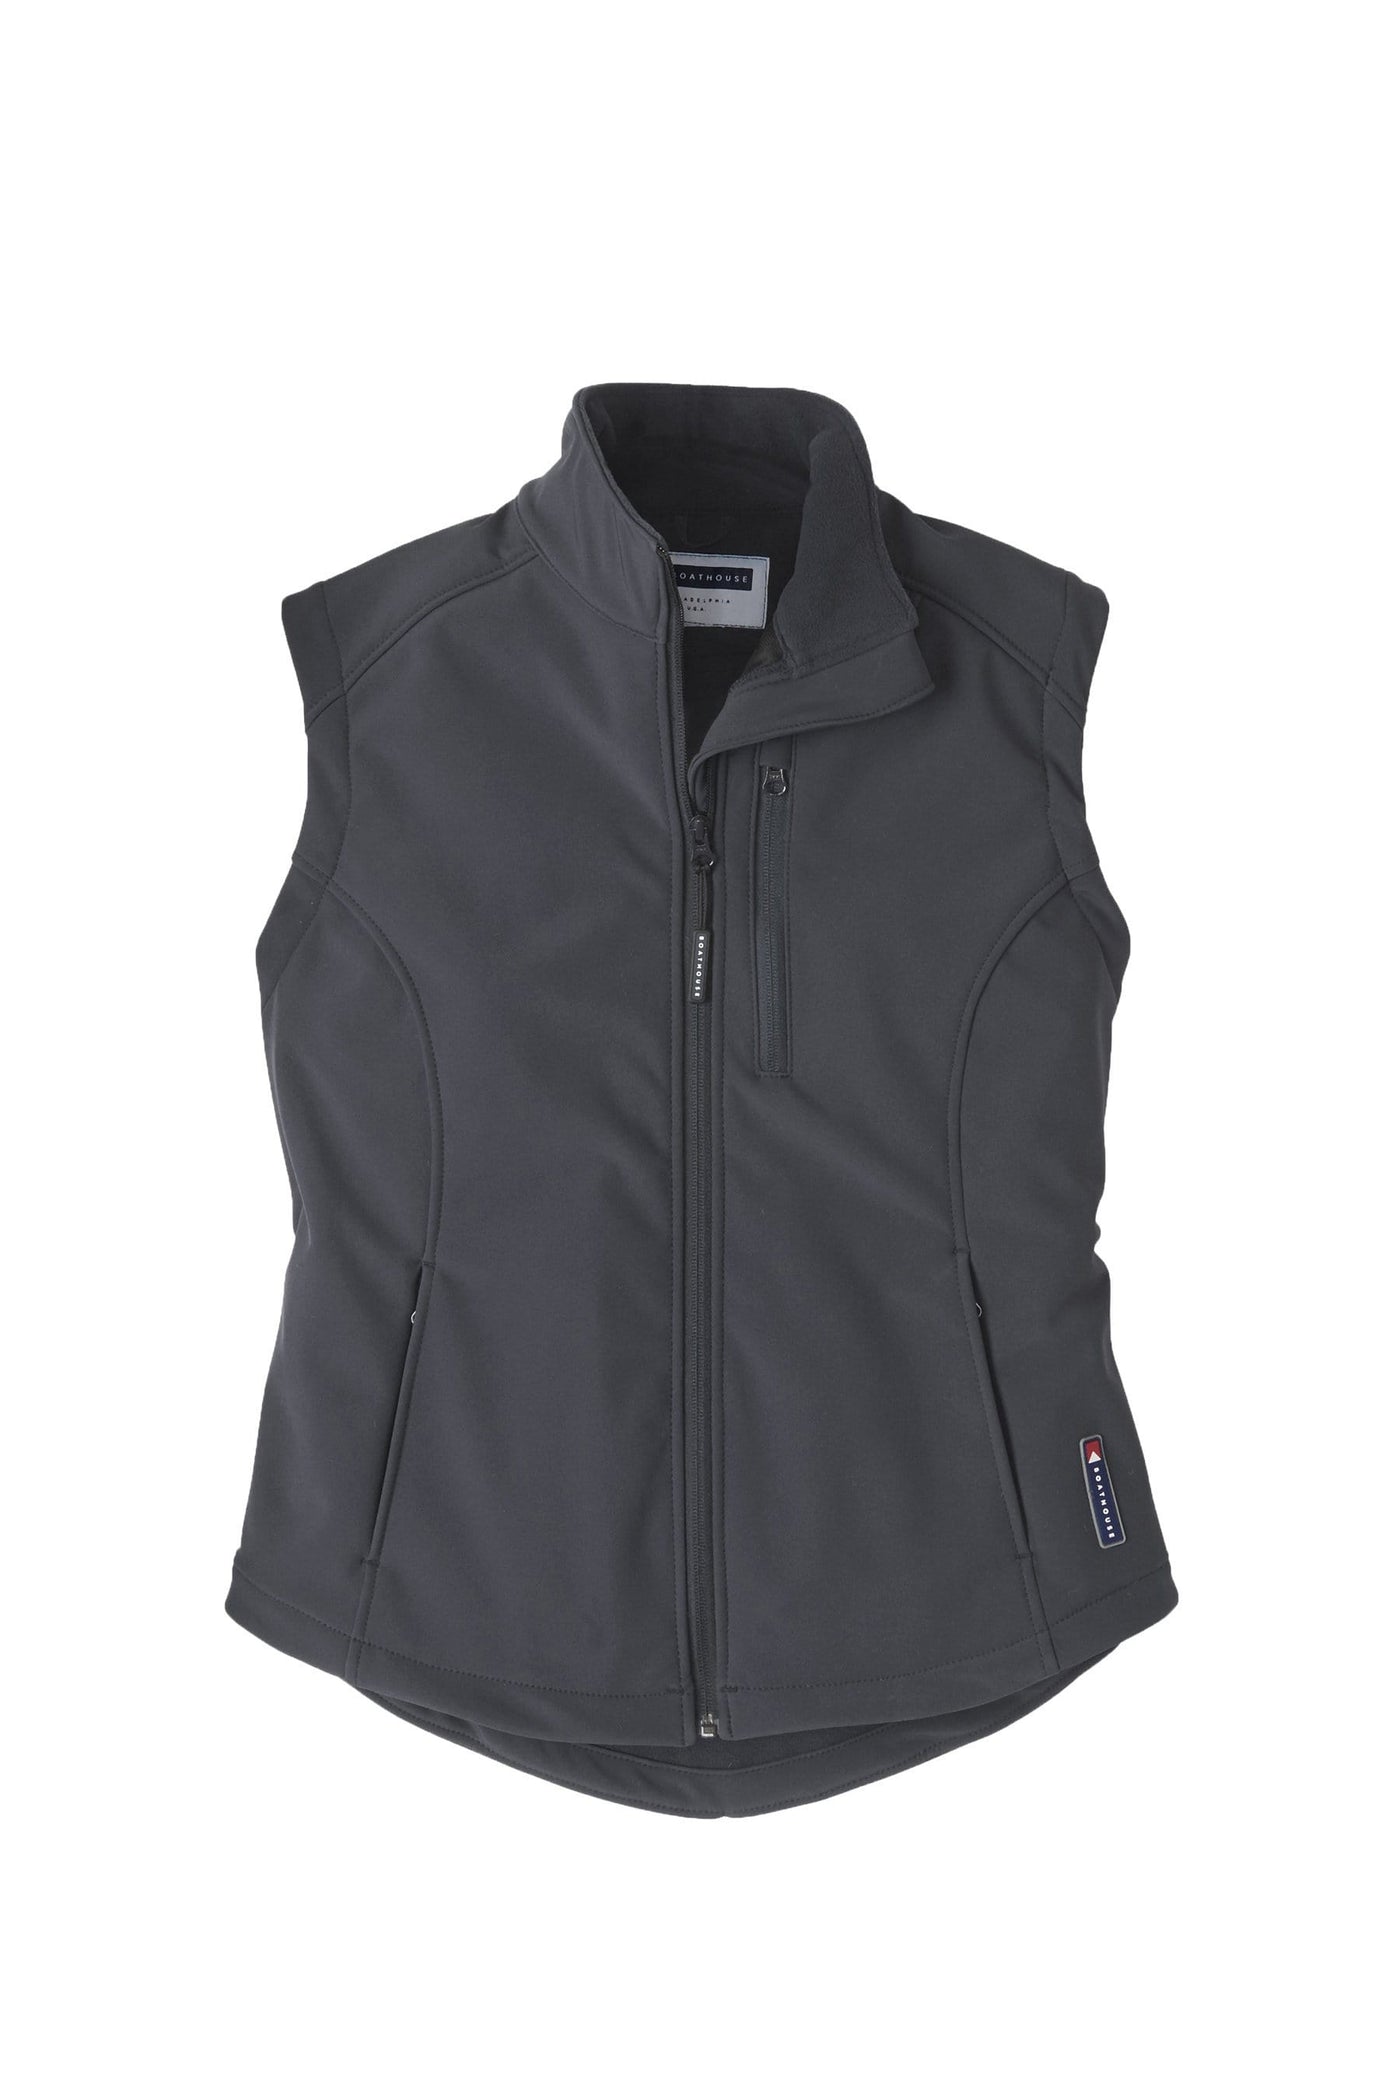 Women's Equinox Soft Shell Vest Graphite / X-Small